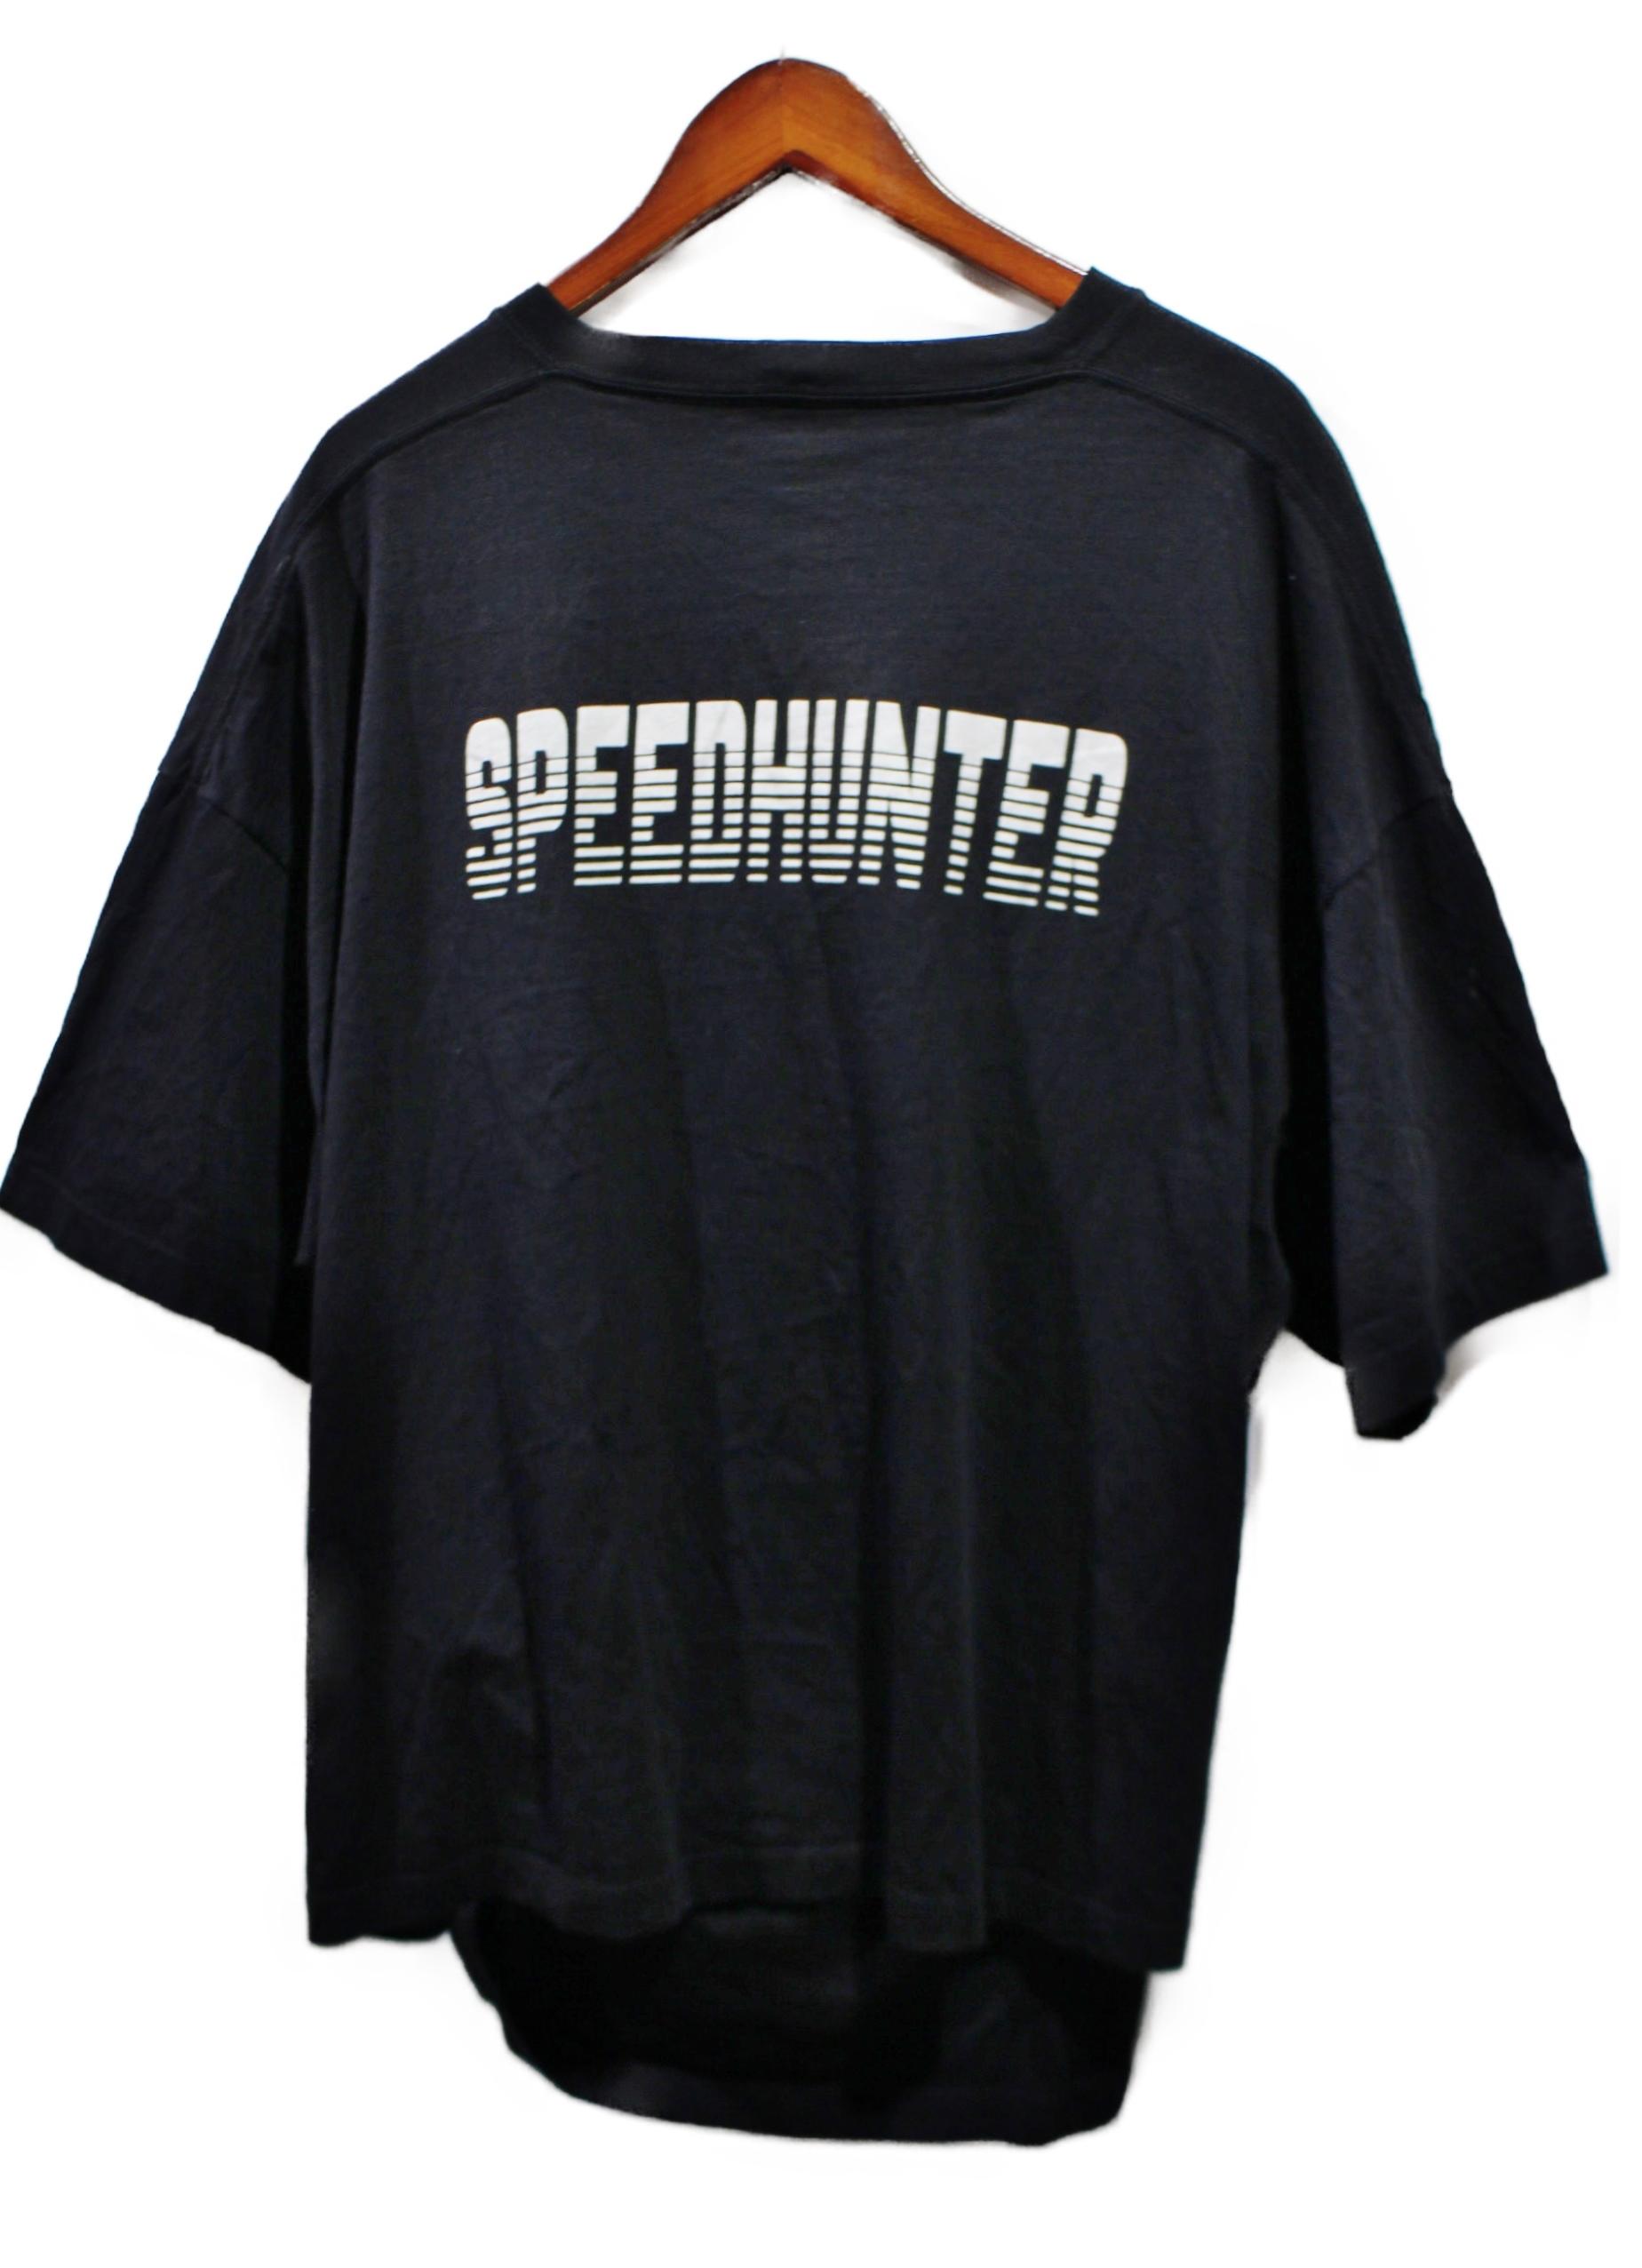 BALENCIAGA (バレンシアガ) SPEED HUNTER/ダブルヘムTシャツ サイズ:L